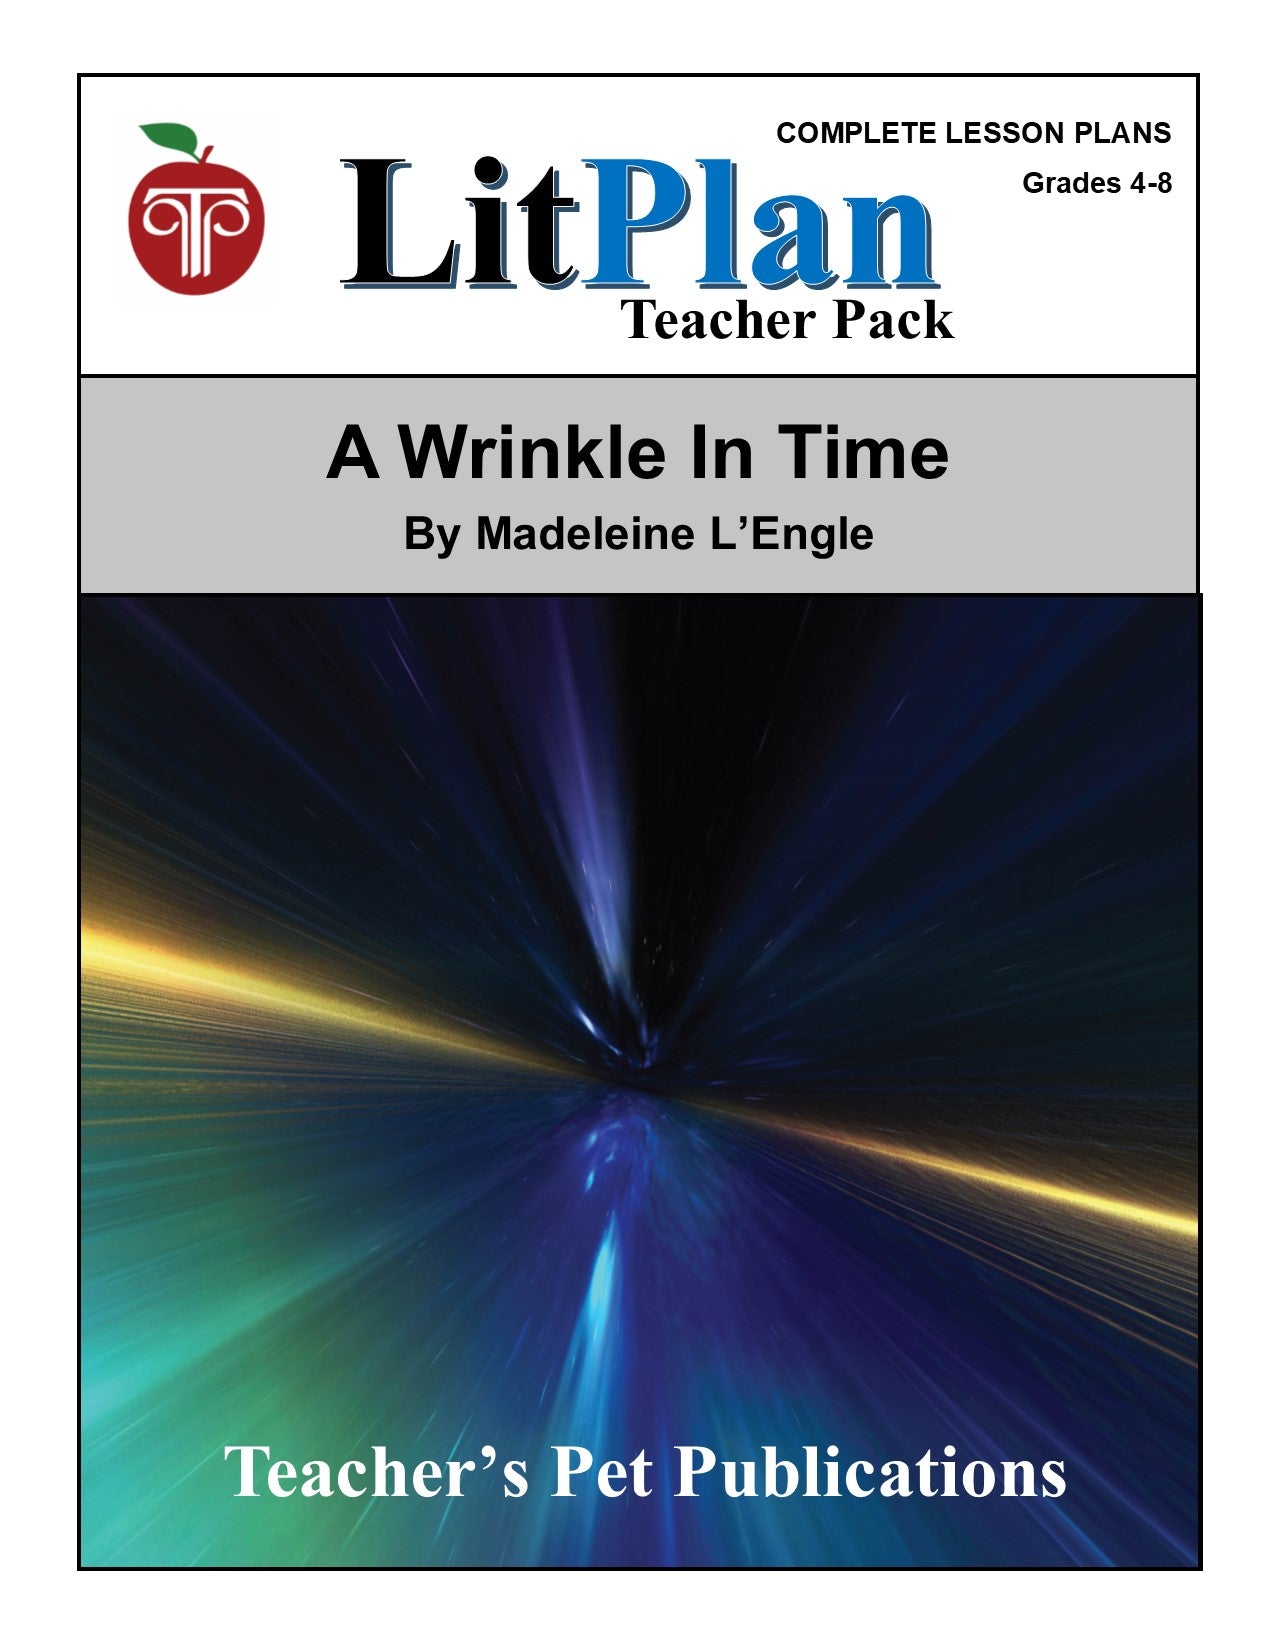 A Wrinkle in Time: LitPlan Teacher Pack Grades 4-8